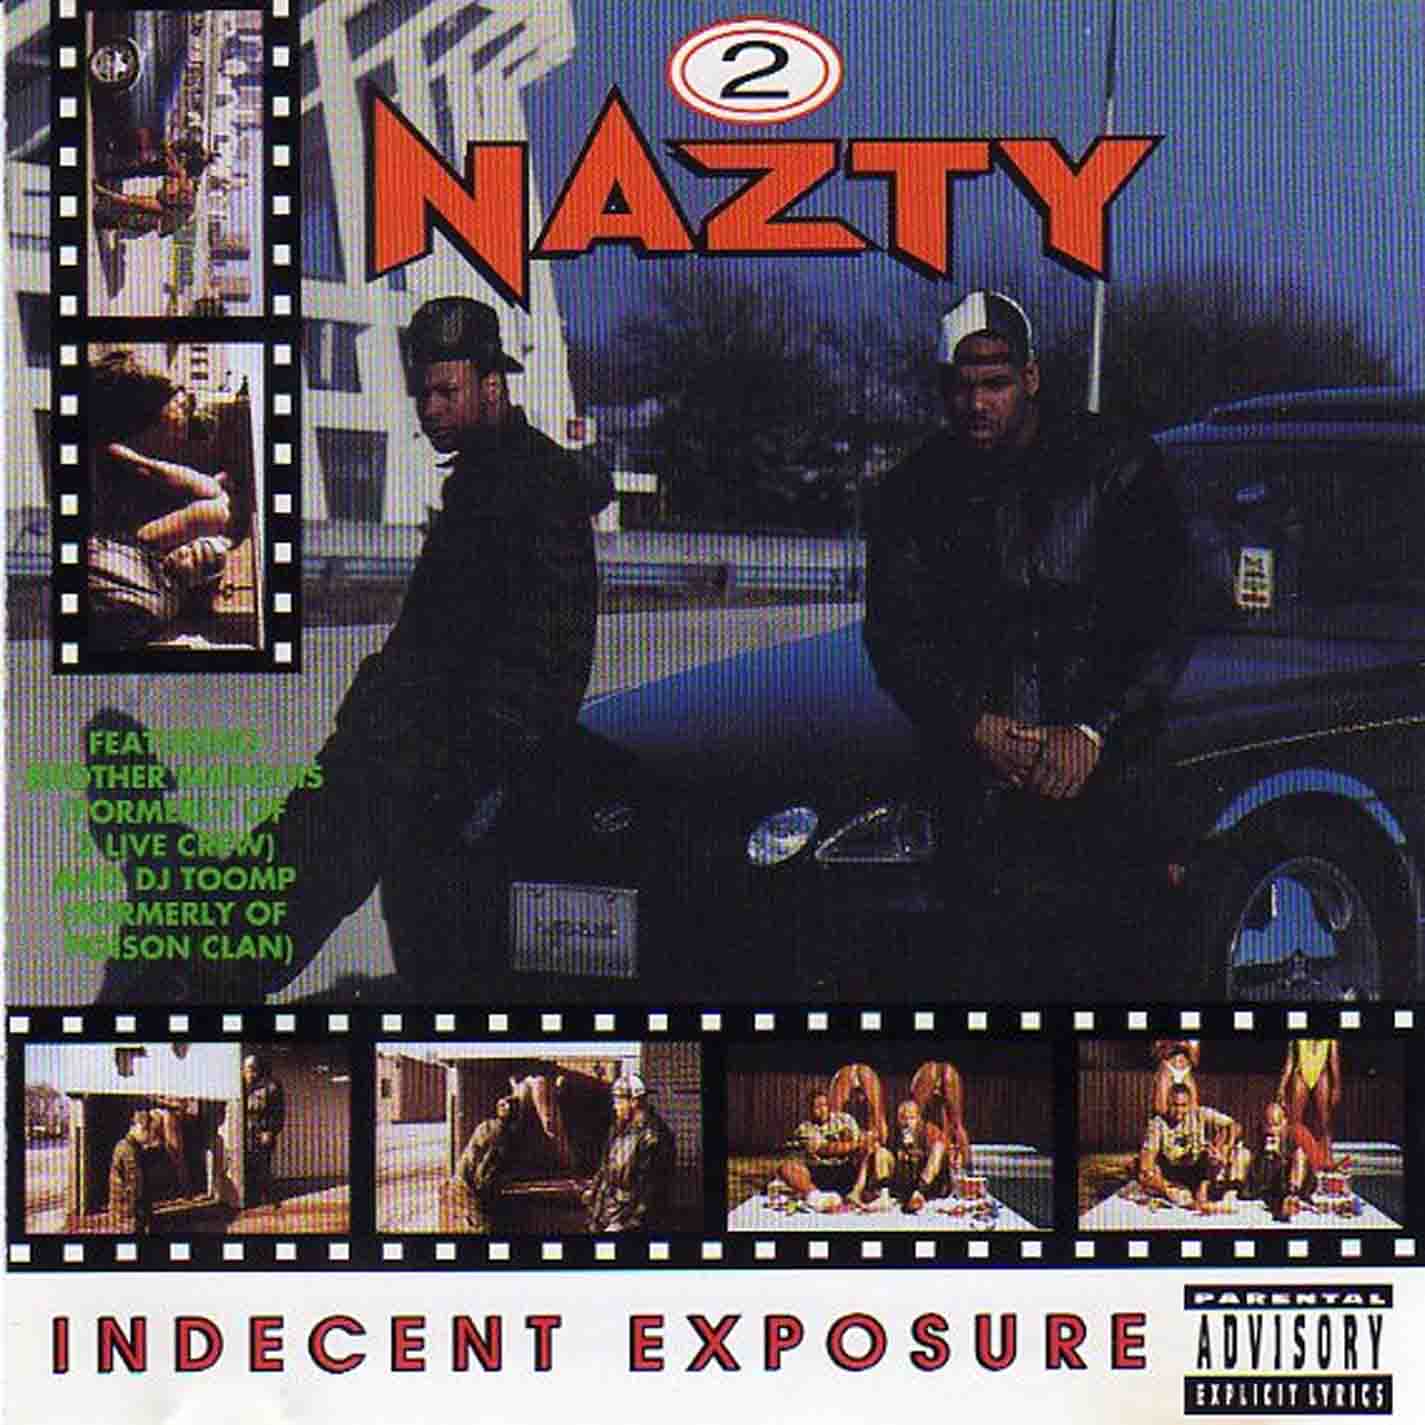 BROTHER MARQUIS - 2 NAZTY INDECENT EXPOSURE (CD LP) c1993